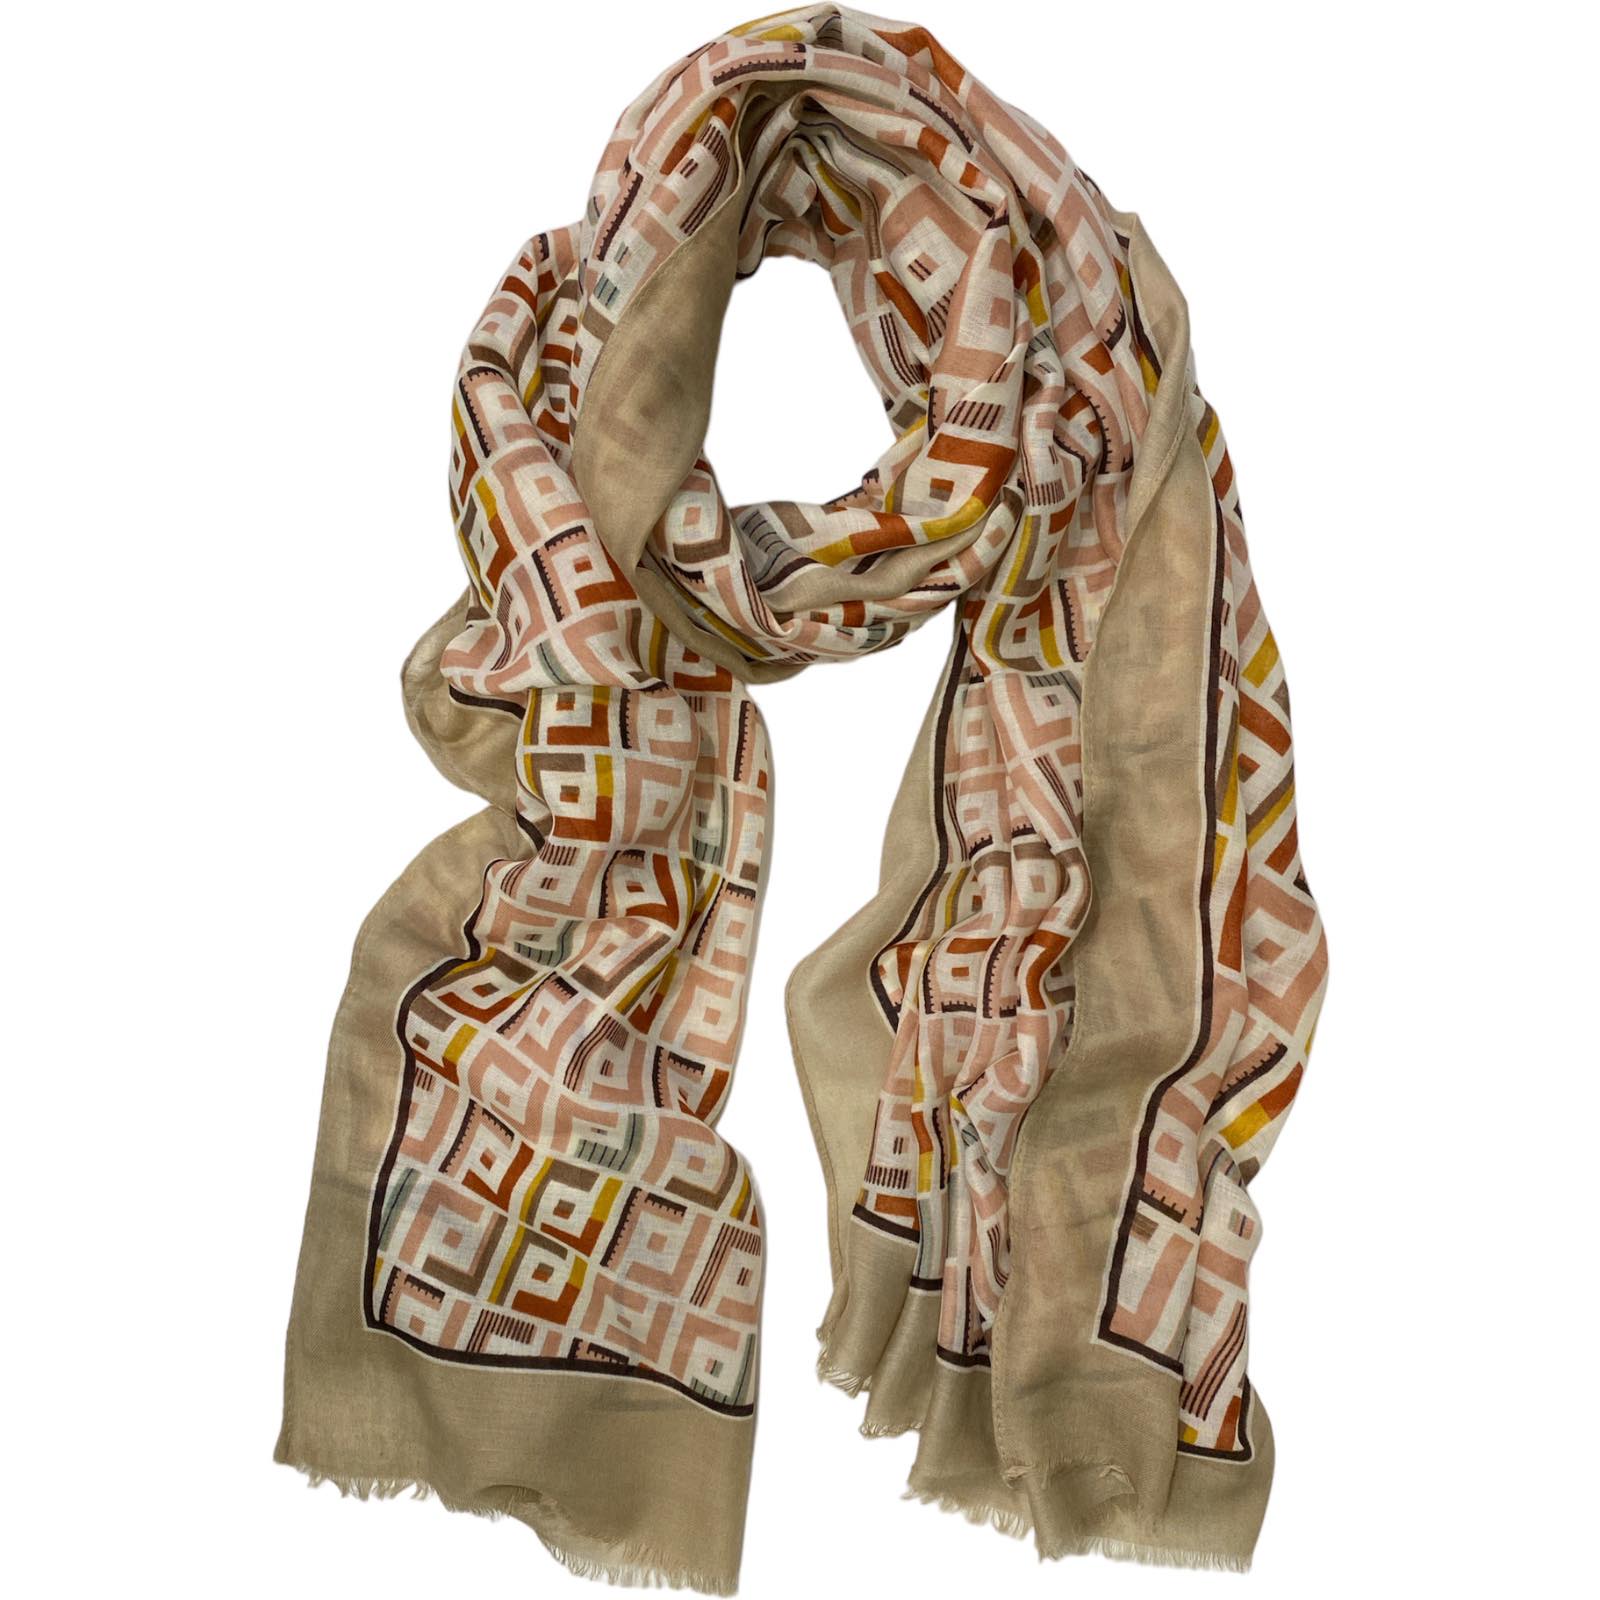 Beige and nude geometric scarf